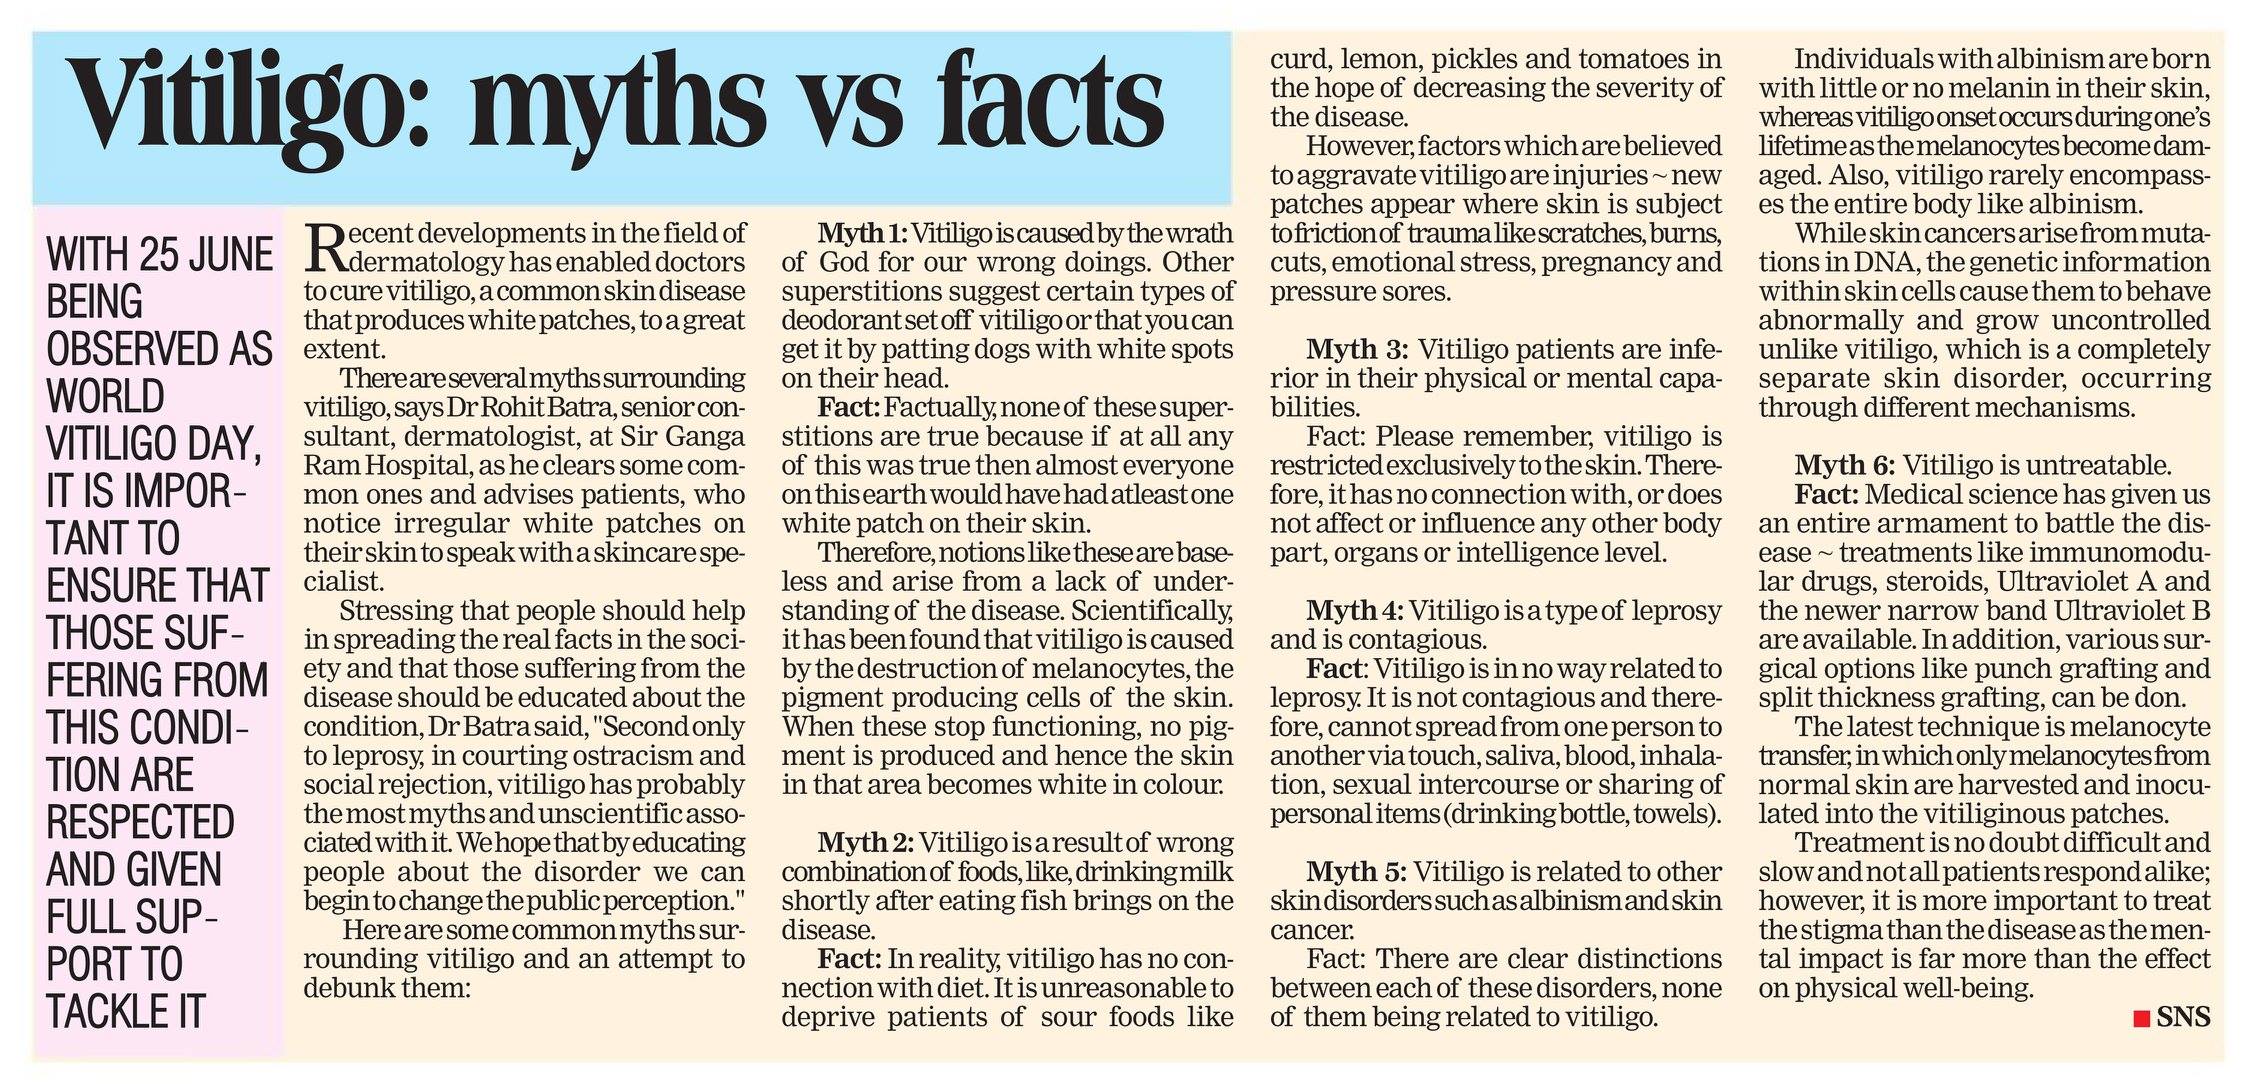 Myths Vs Facts about Vitiligo cleared by Dr. Rohit Batra, Dermatologist, Dermaworld Skin & Hair Clinics.